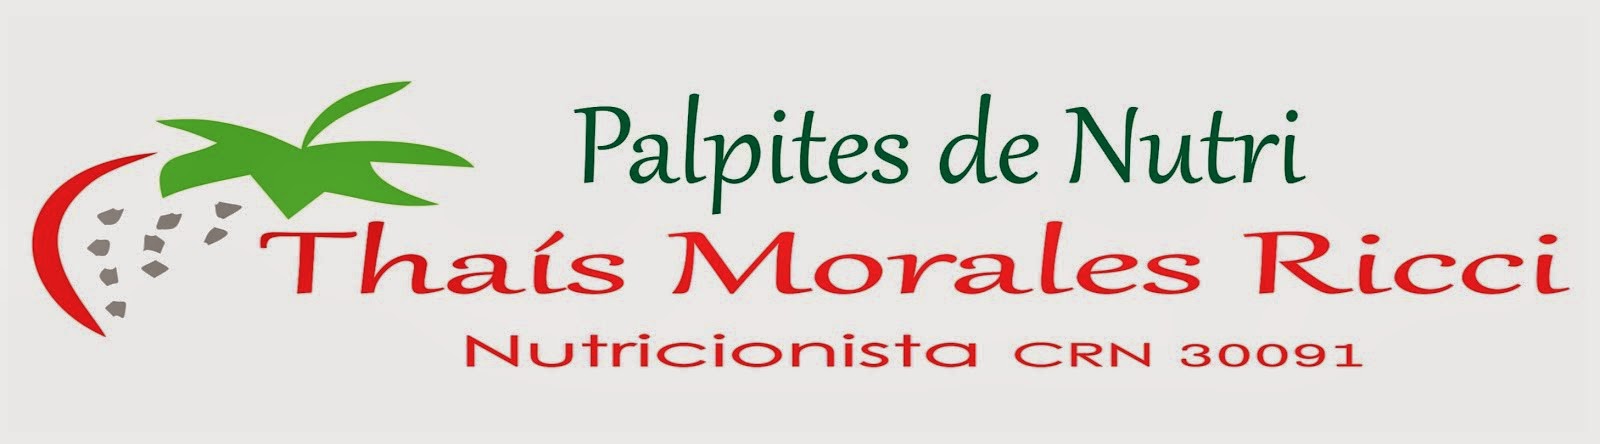 Palpites de Nutri - Thaís Morales Ricci